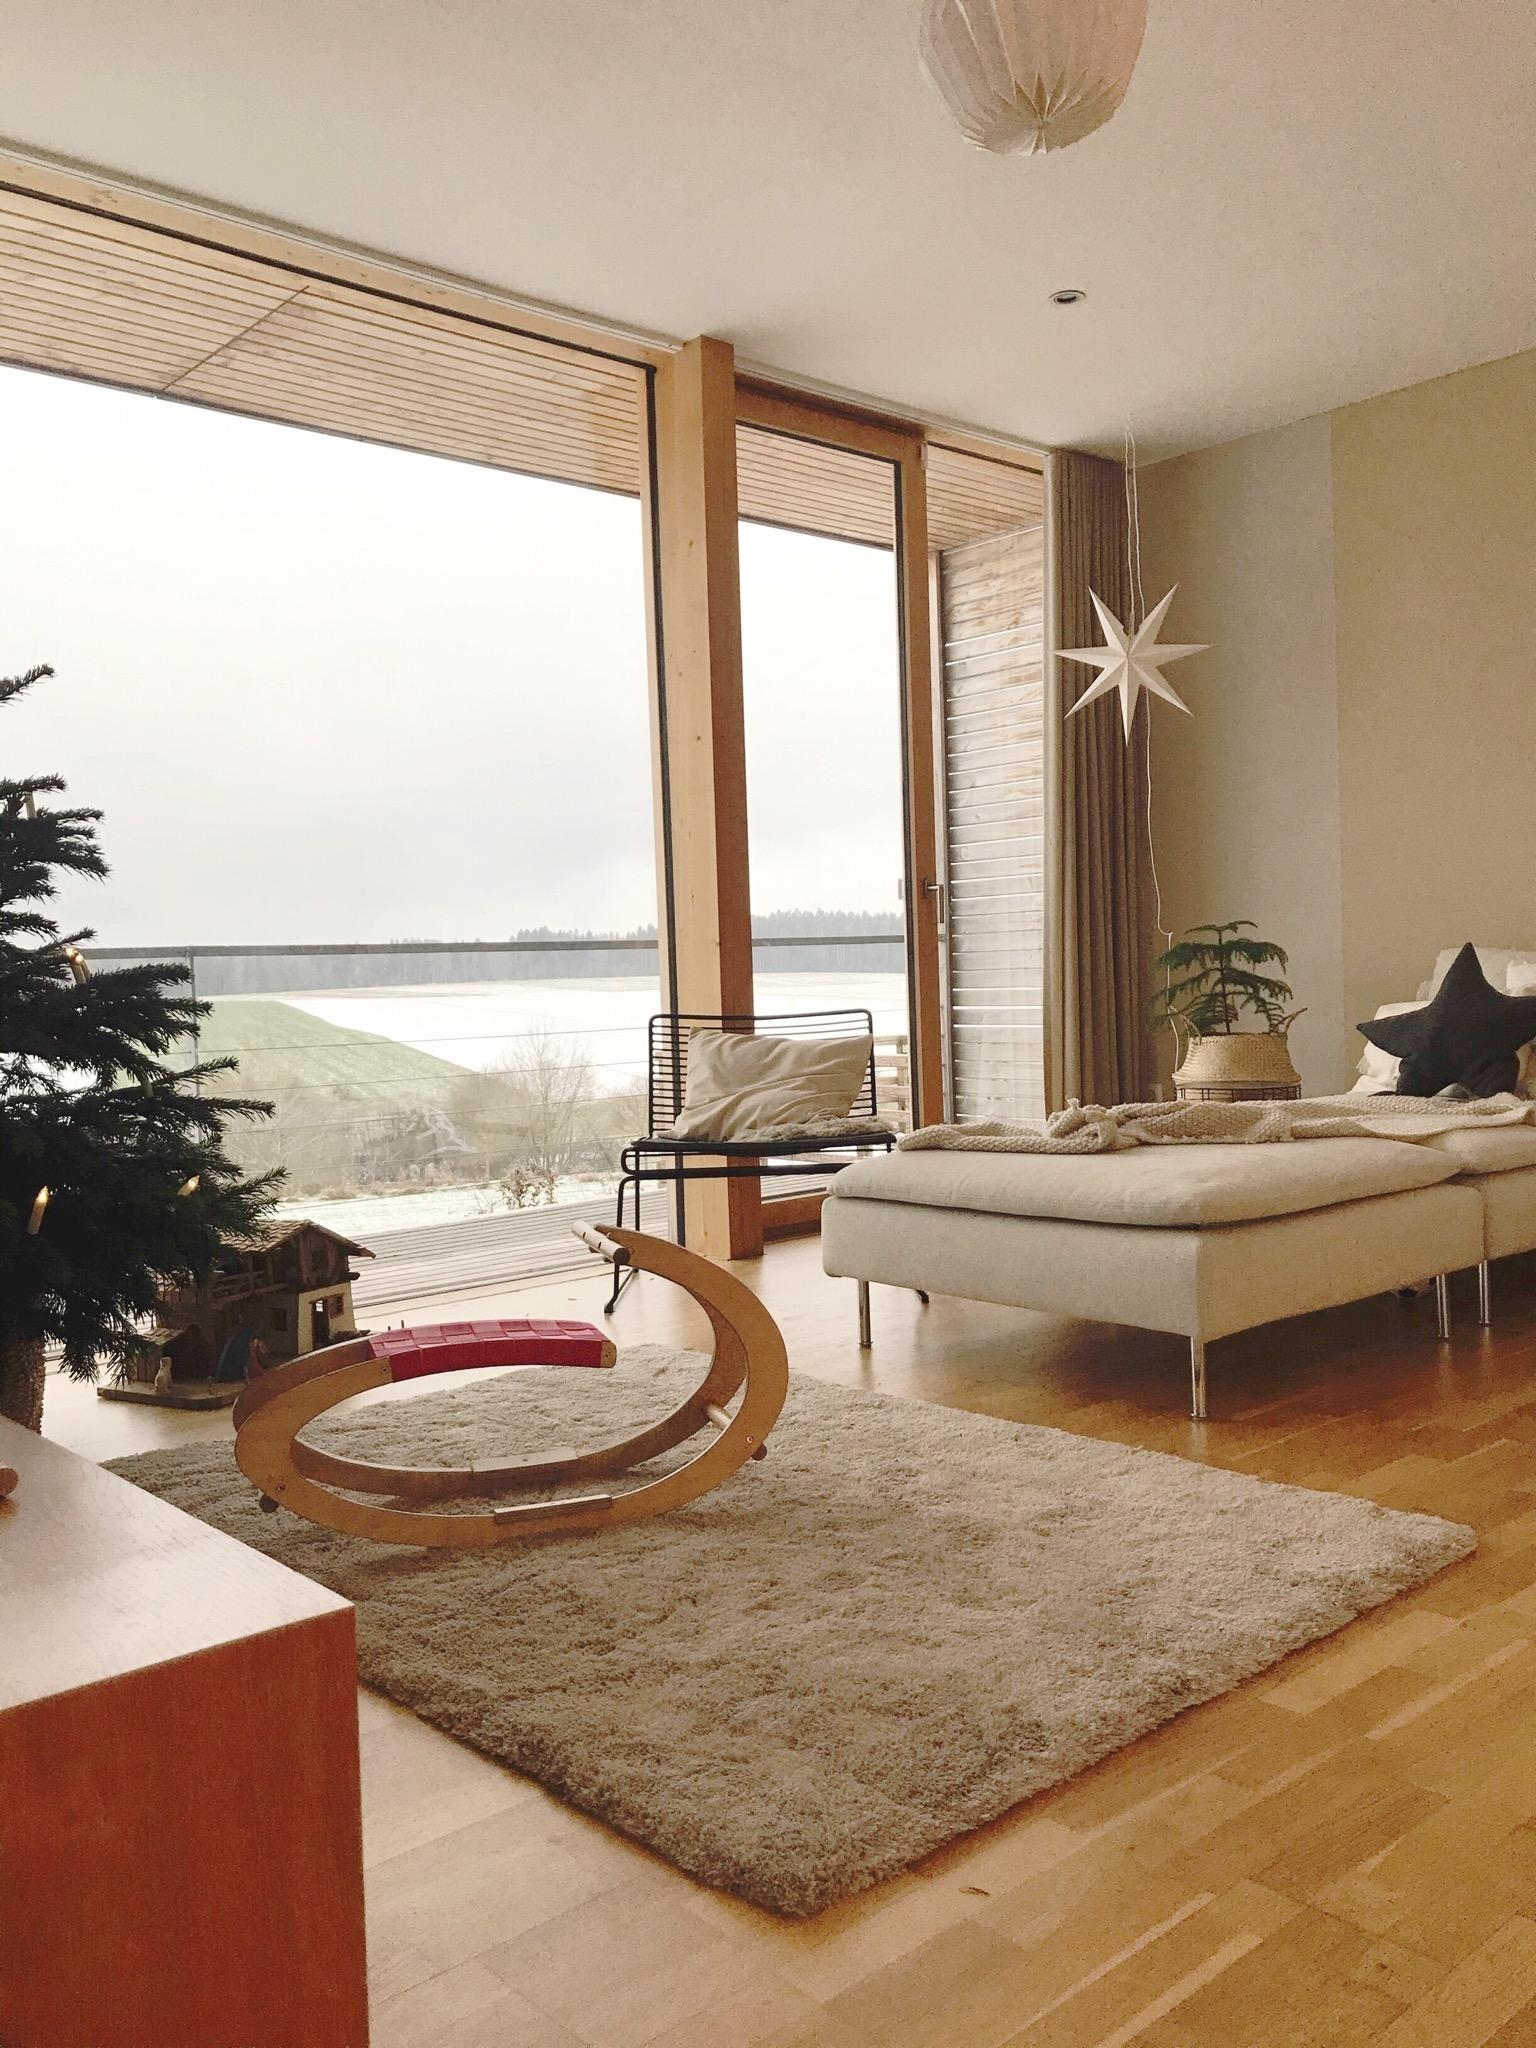 #christmas #cozy #livingroom
Erster Schnee, drinnen schon Weihnachtsstimmung-perfekter Dezember 